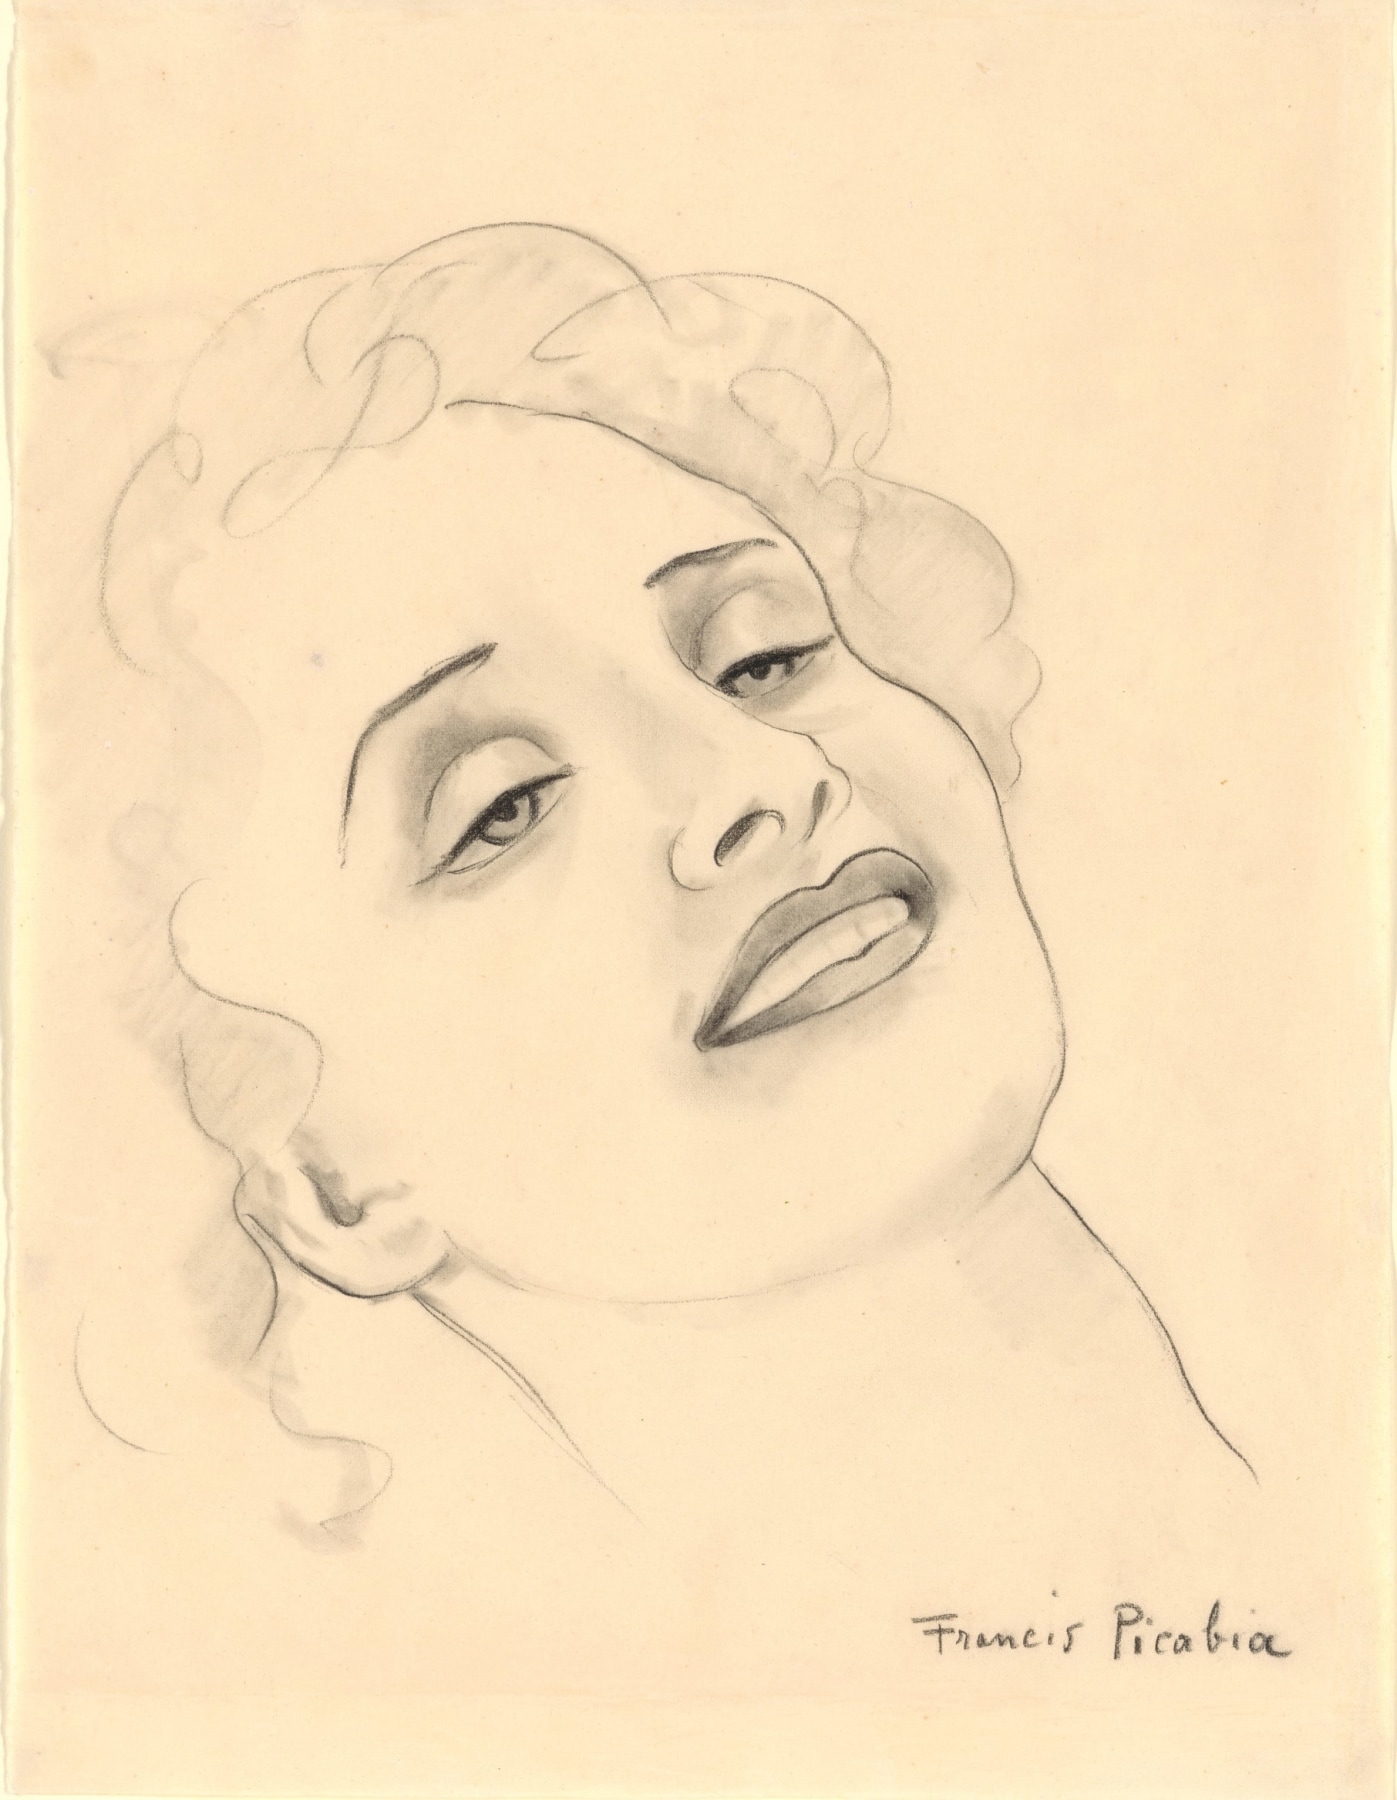 Francis Picabia

&amp;ldquo;T&amp;ecirc;te de femme&amp;rdquo;, ca. 1942

Pencil on paper

10 3/4 x 8 1/4 inches

27.5 x 21 cm

PIZ 151
$140,000